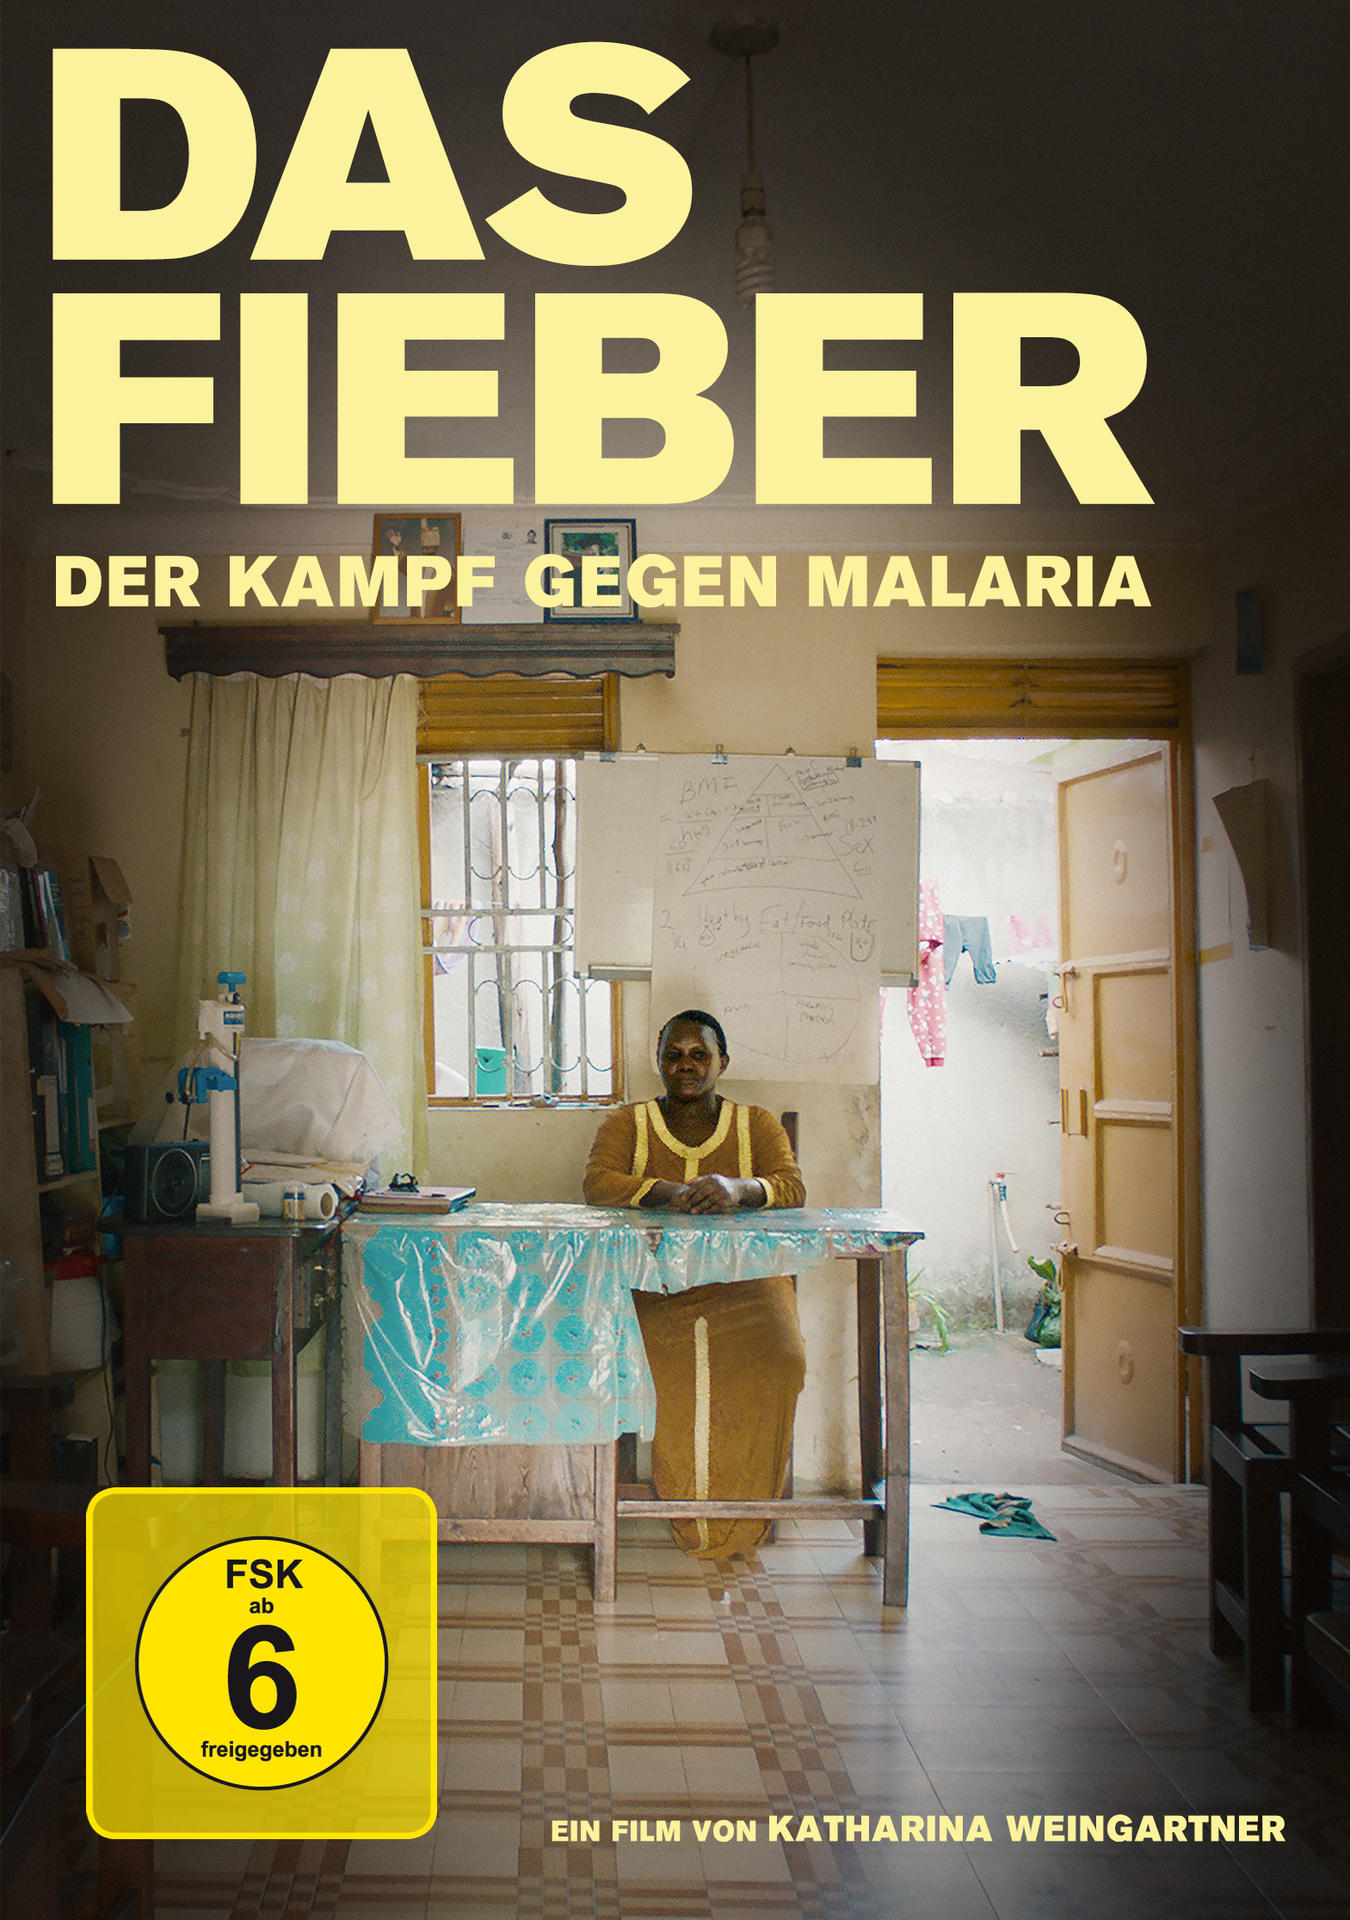 DVD gegen Fieber Kampf - Malaria Das Der